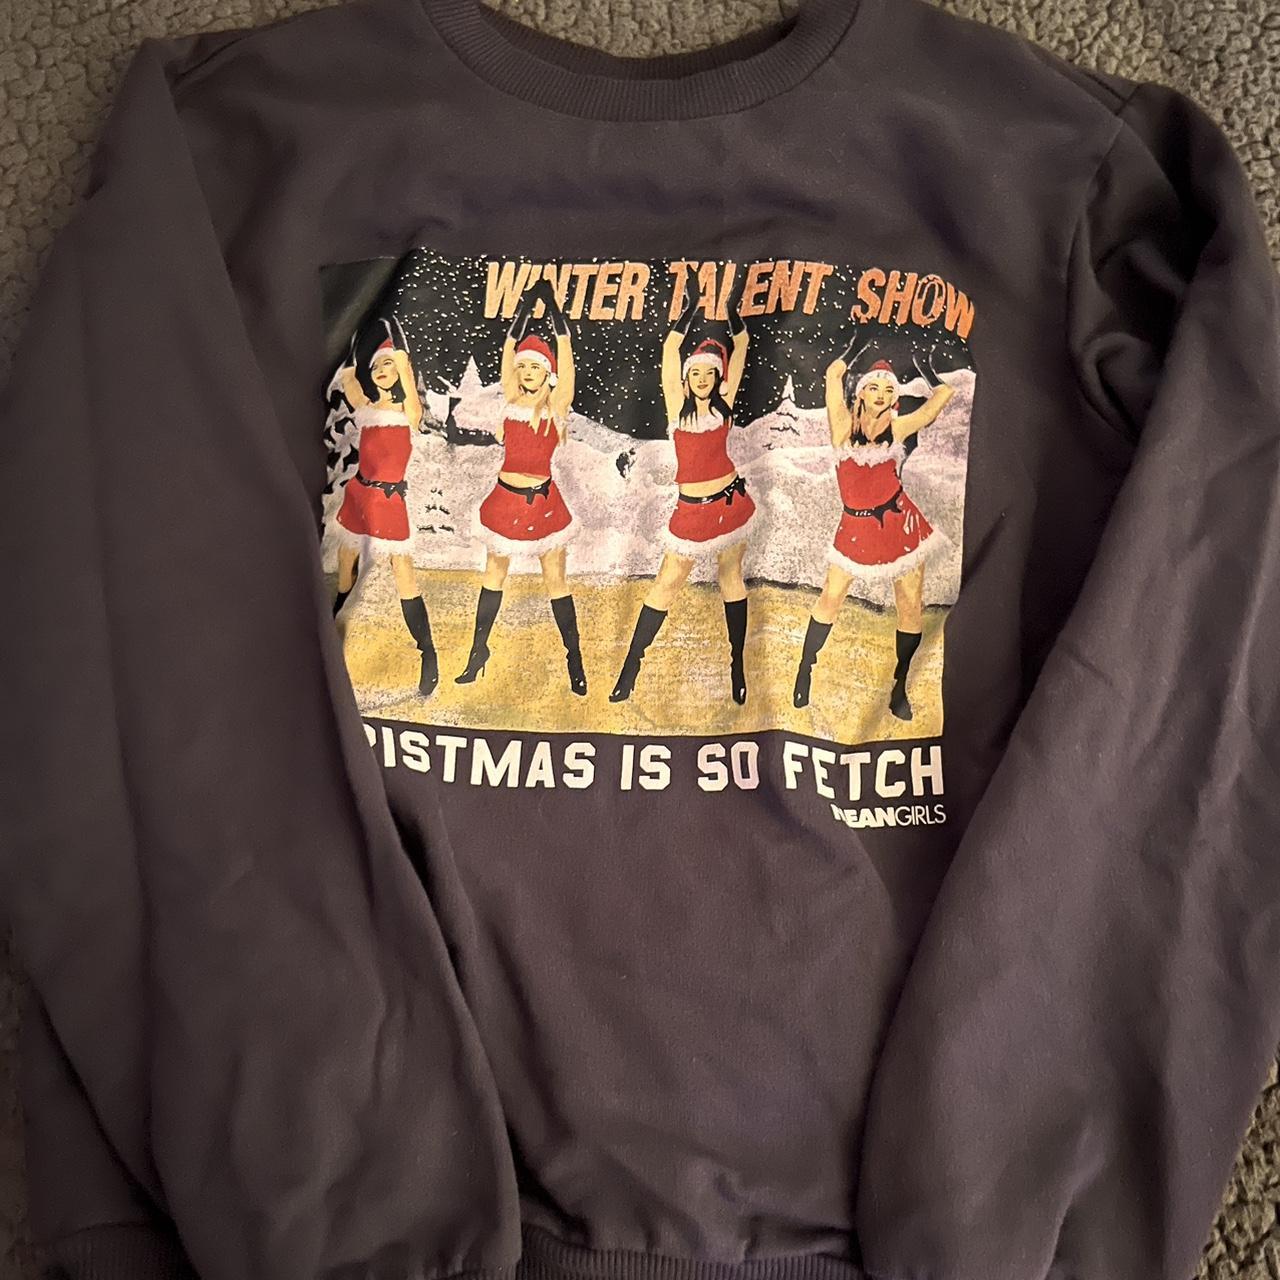 Mean Girls Sweatshirt